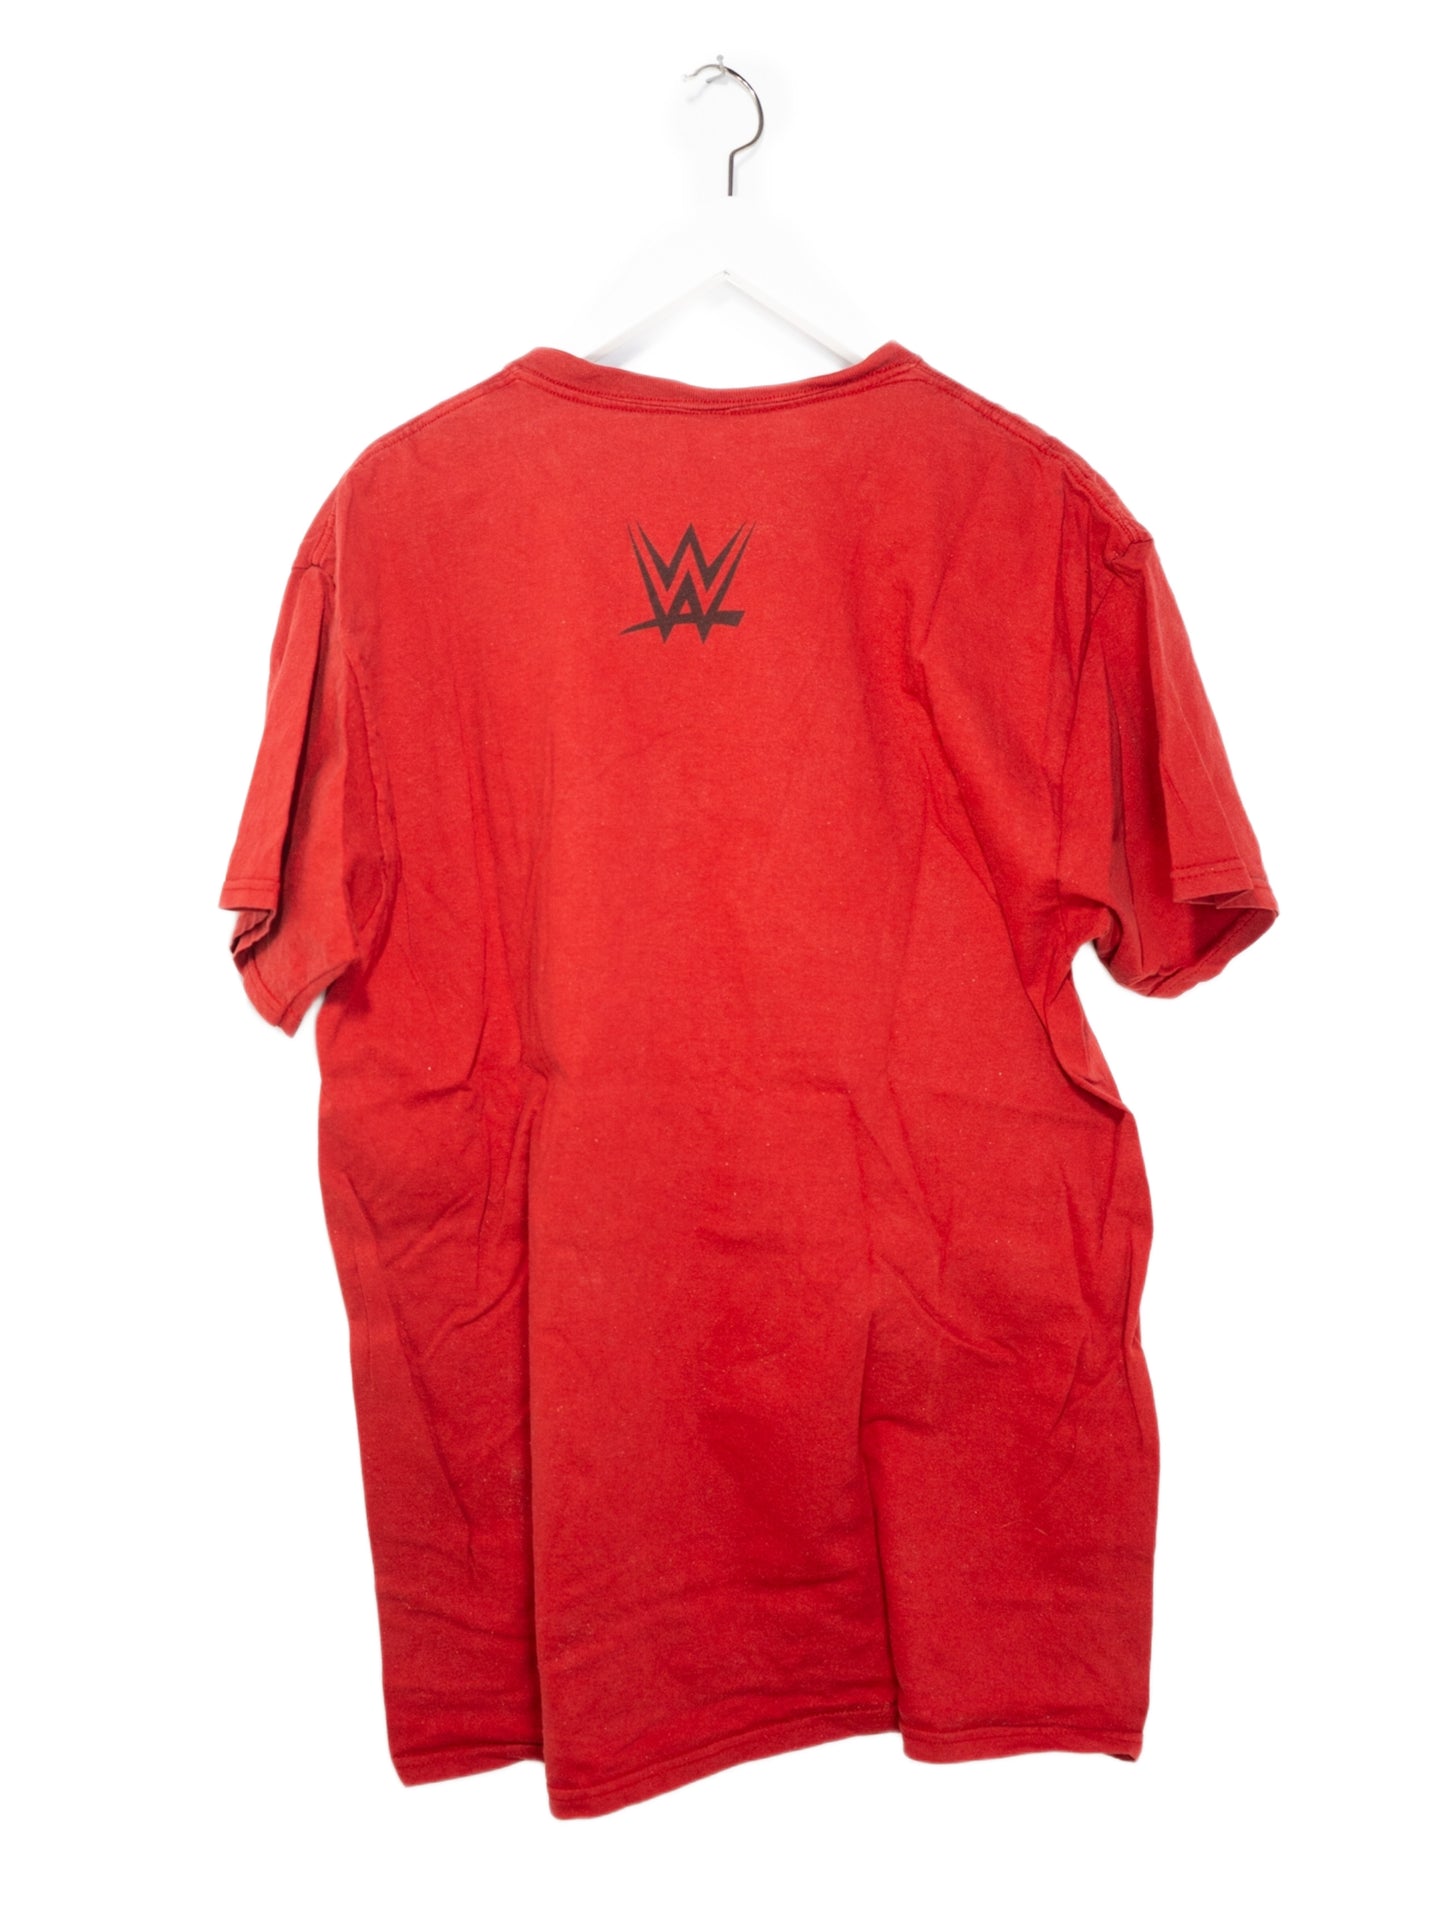 WWE Wrestlemania T-Shirt 2019